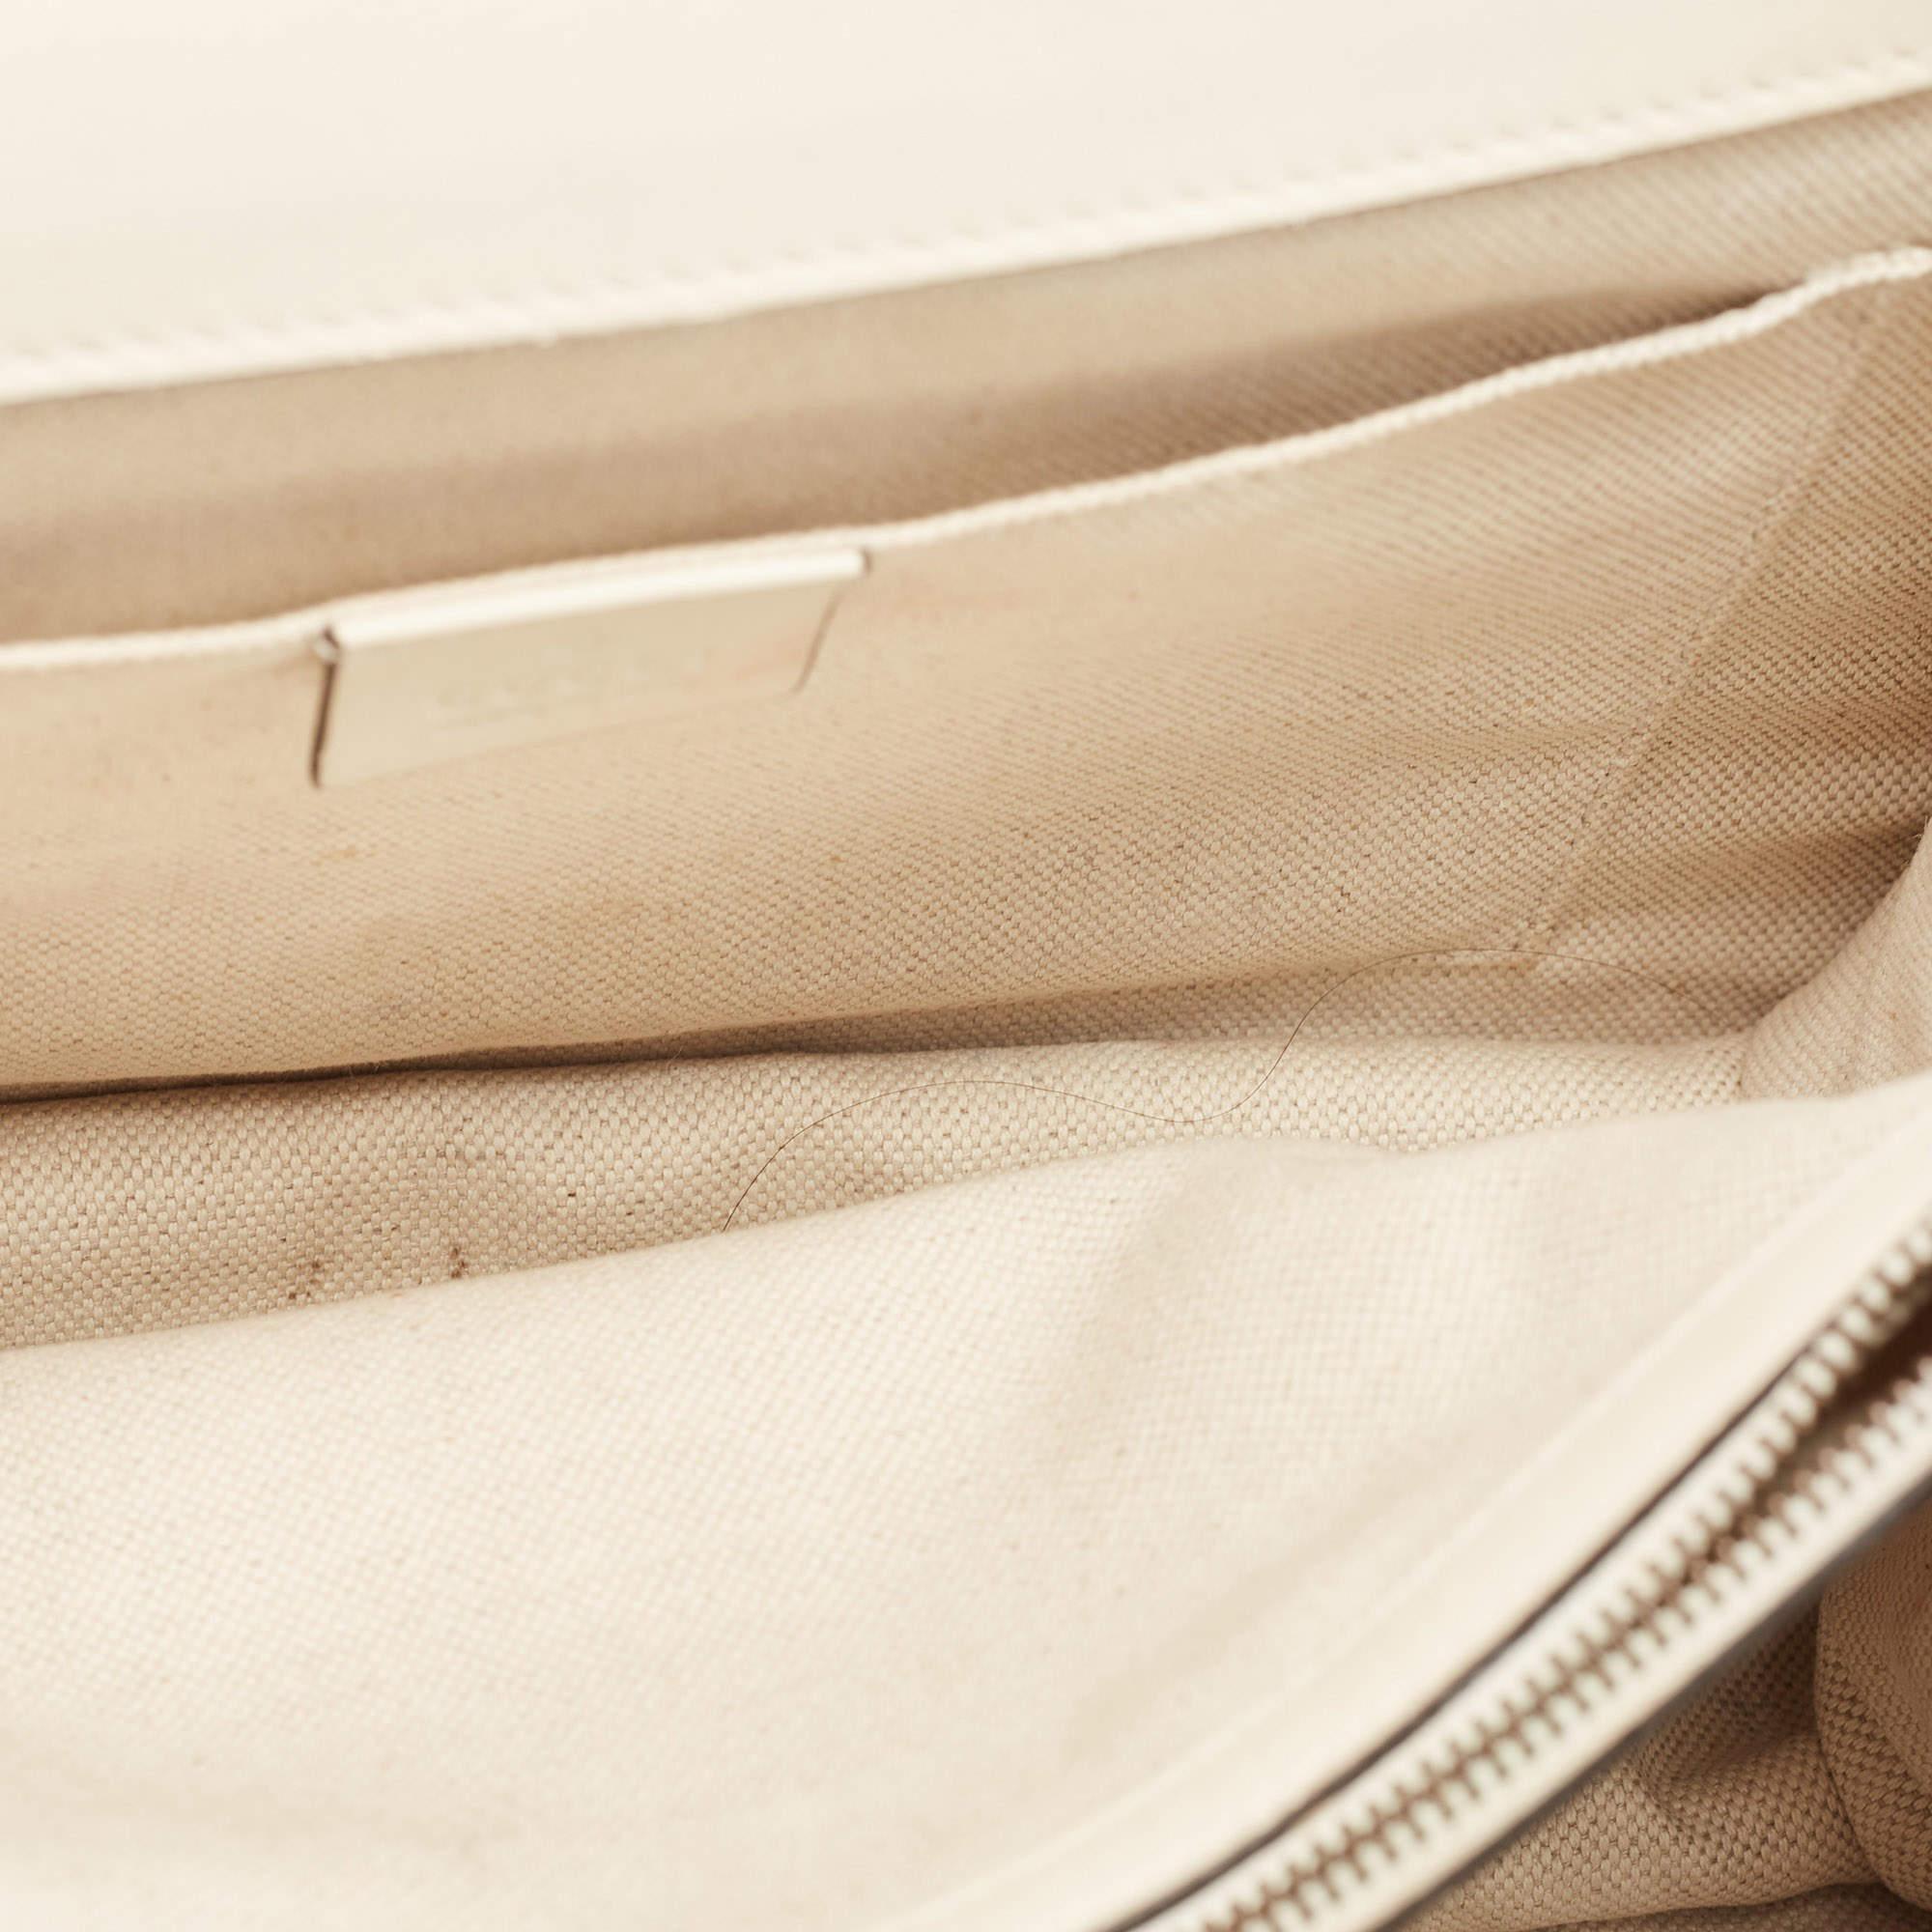 Gucci Tricolor Leather Medium Dionysus Bamboo Top Handle Bag 2